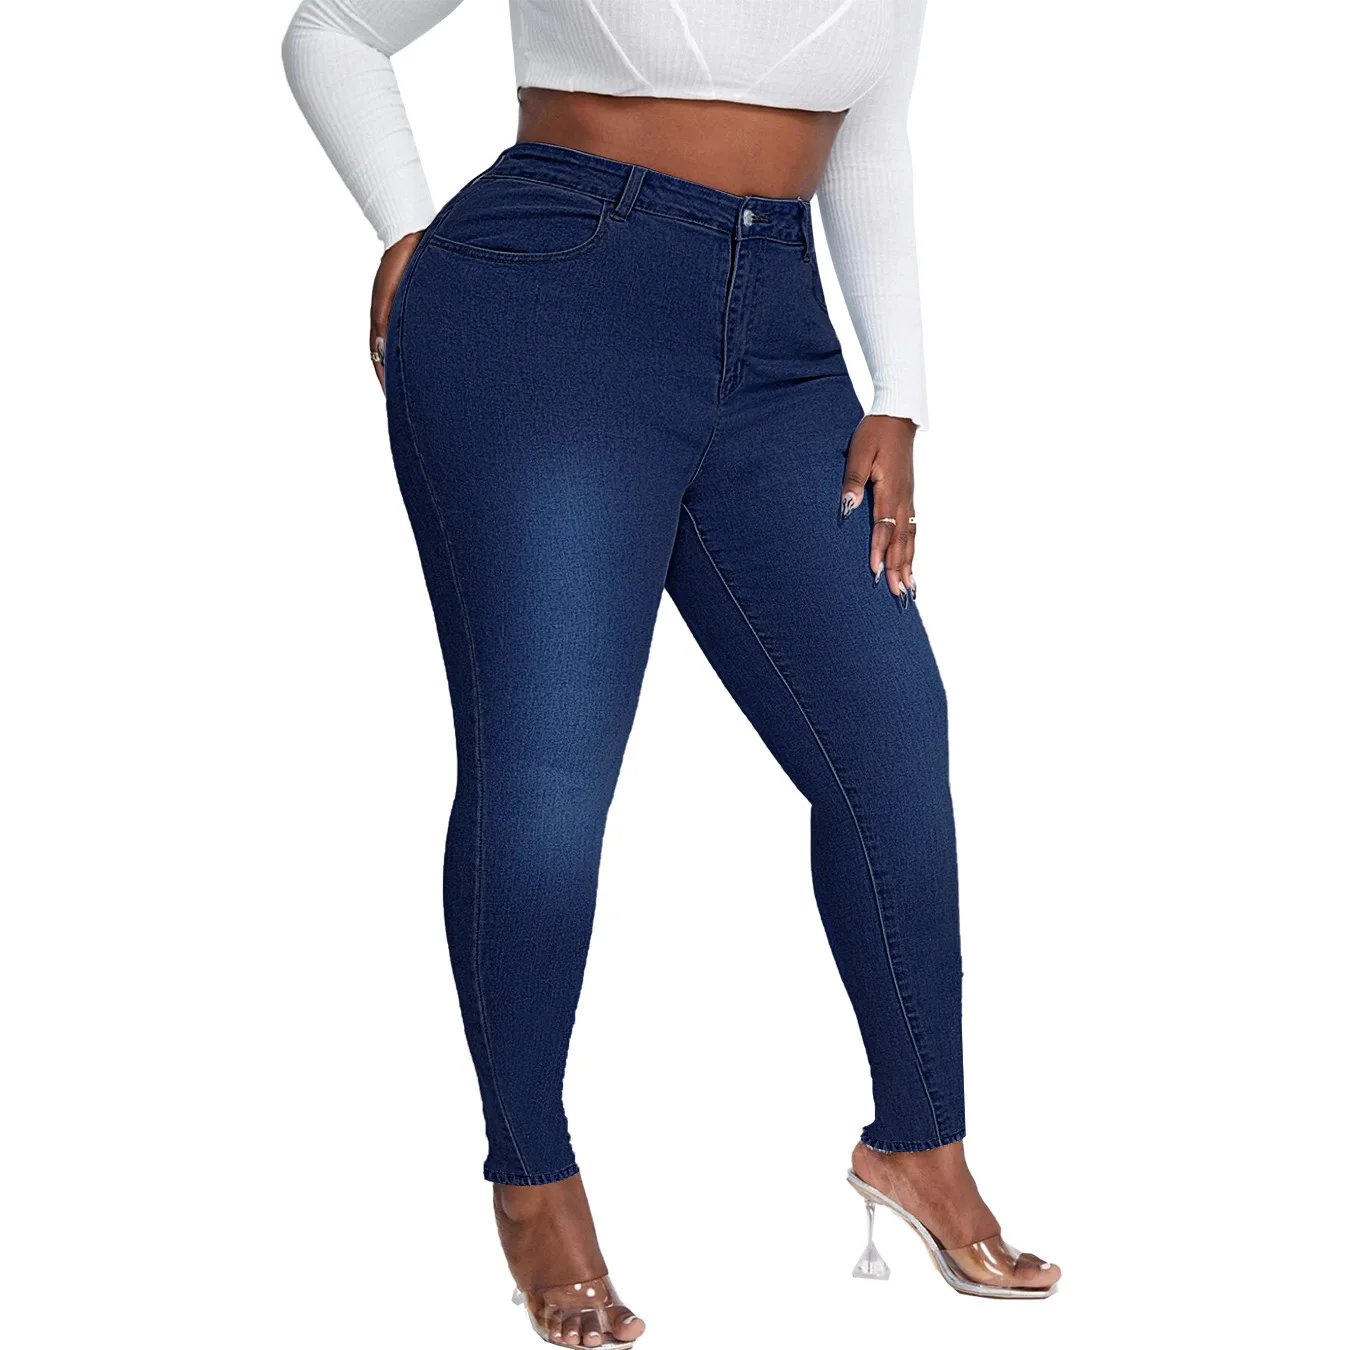 2023 New Women's High Waist Plus Size Jeans Fashion Stretch Skinny Denim Pencil Pants Casual Female Trousers XL-4XL Drop Ship images - 6